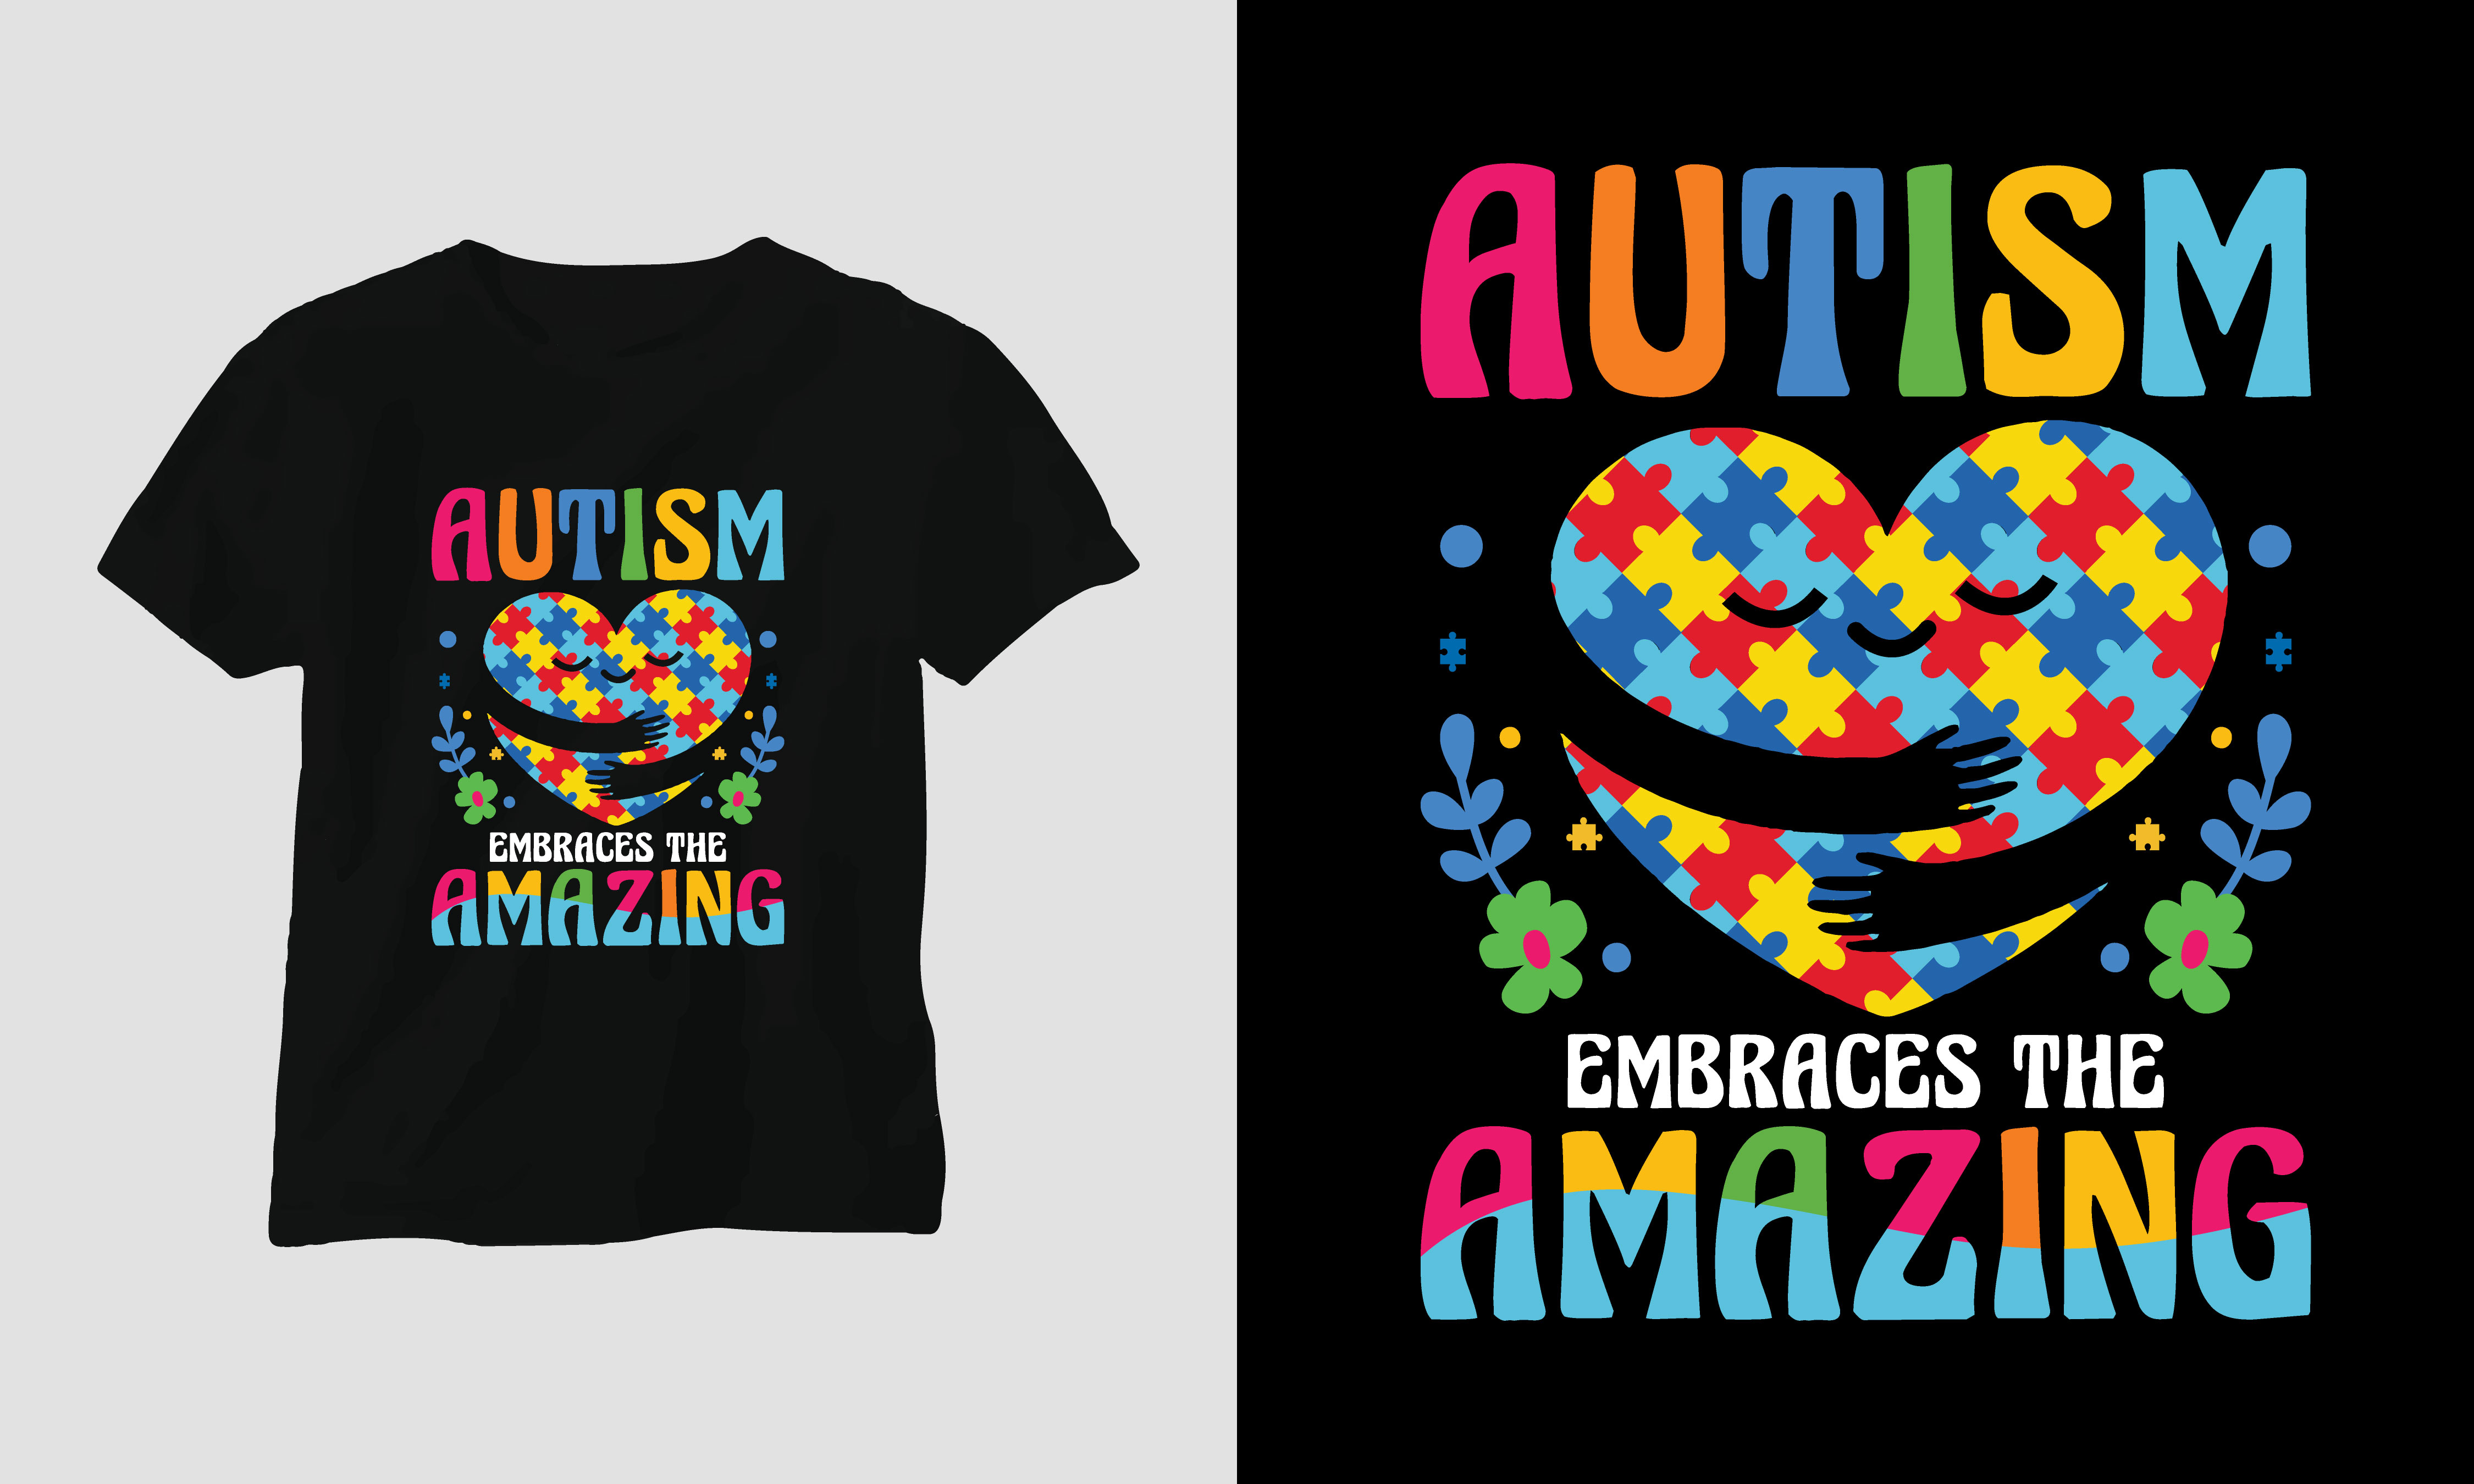 Autism Embraces the Amazing T-shirt preview image.